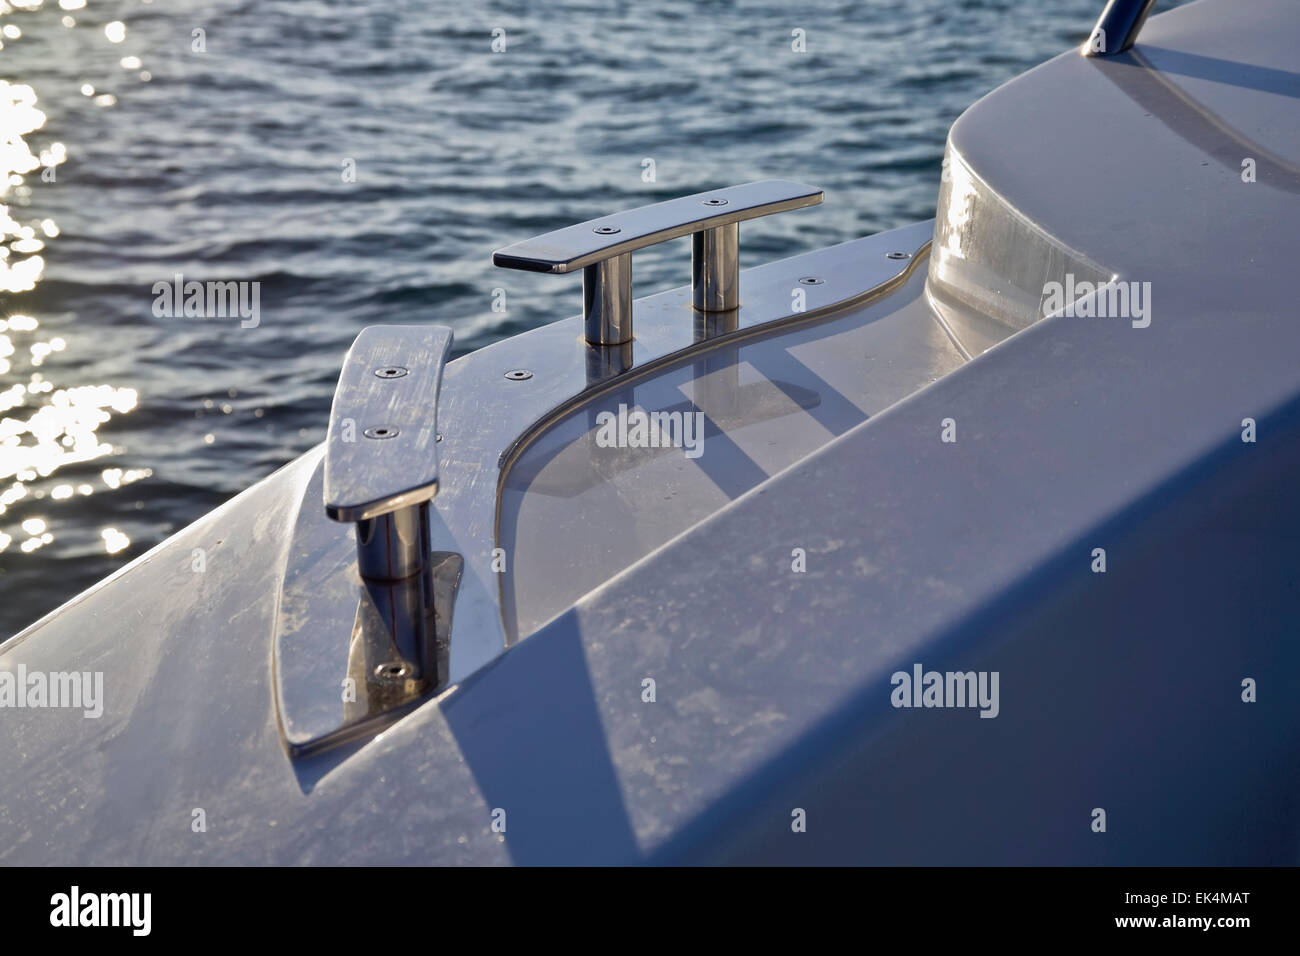 Italy, Nettuno (Rome), luxury yacht Rizzardi 45' (motor boat), steel bollards Stock Photo